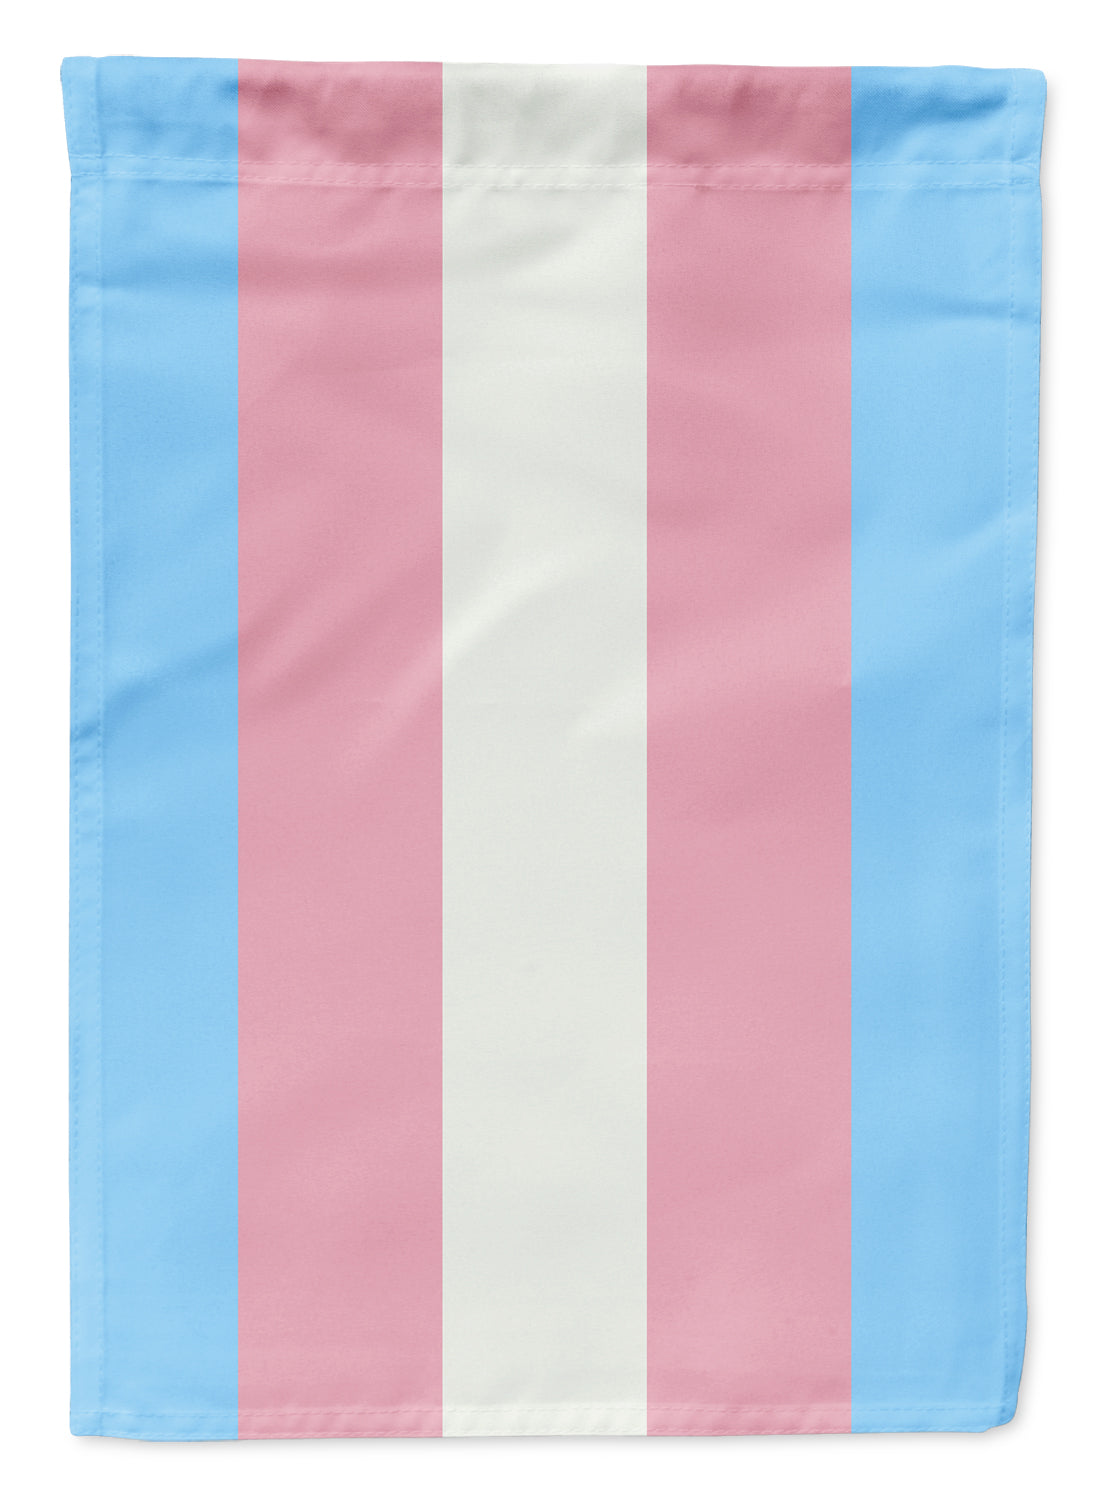 Transgender Pride Flag Garden Size